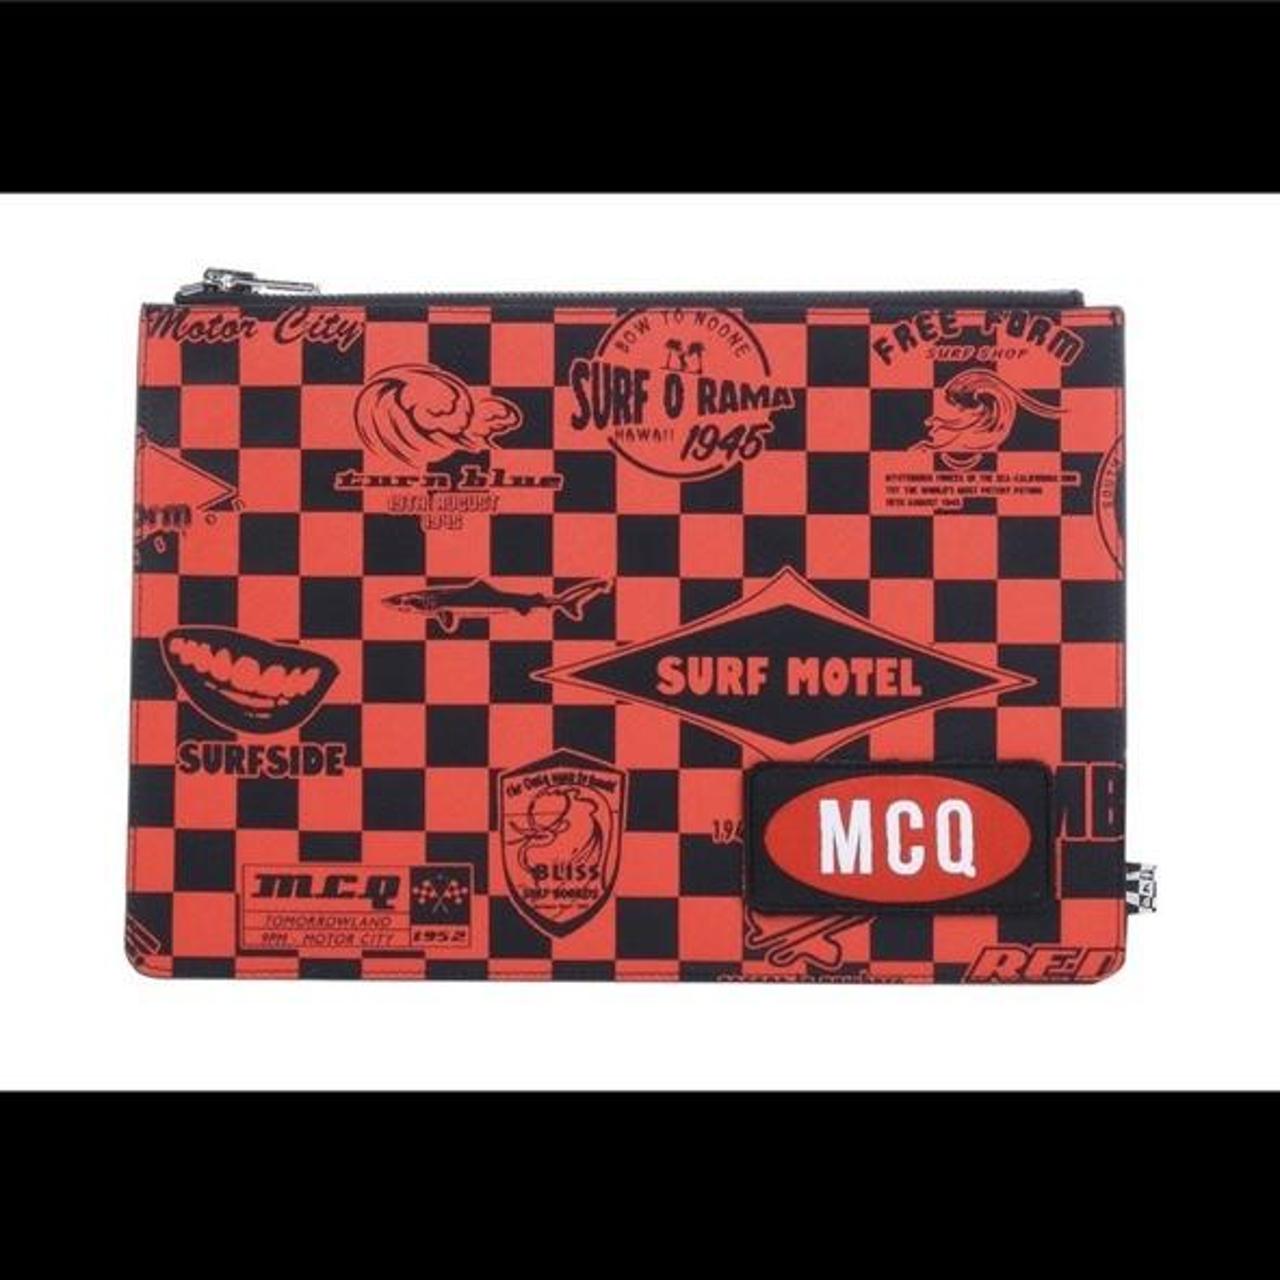 McQ Alexander McQueen Men's Red and Black Bag